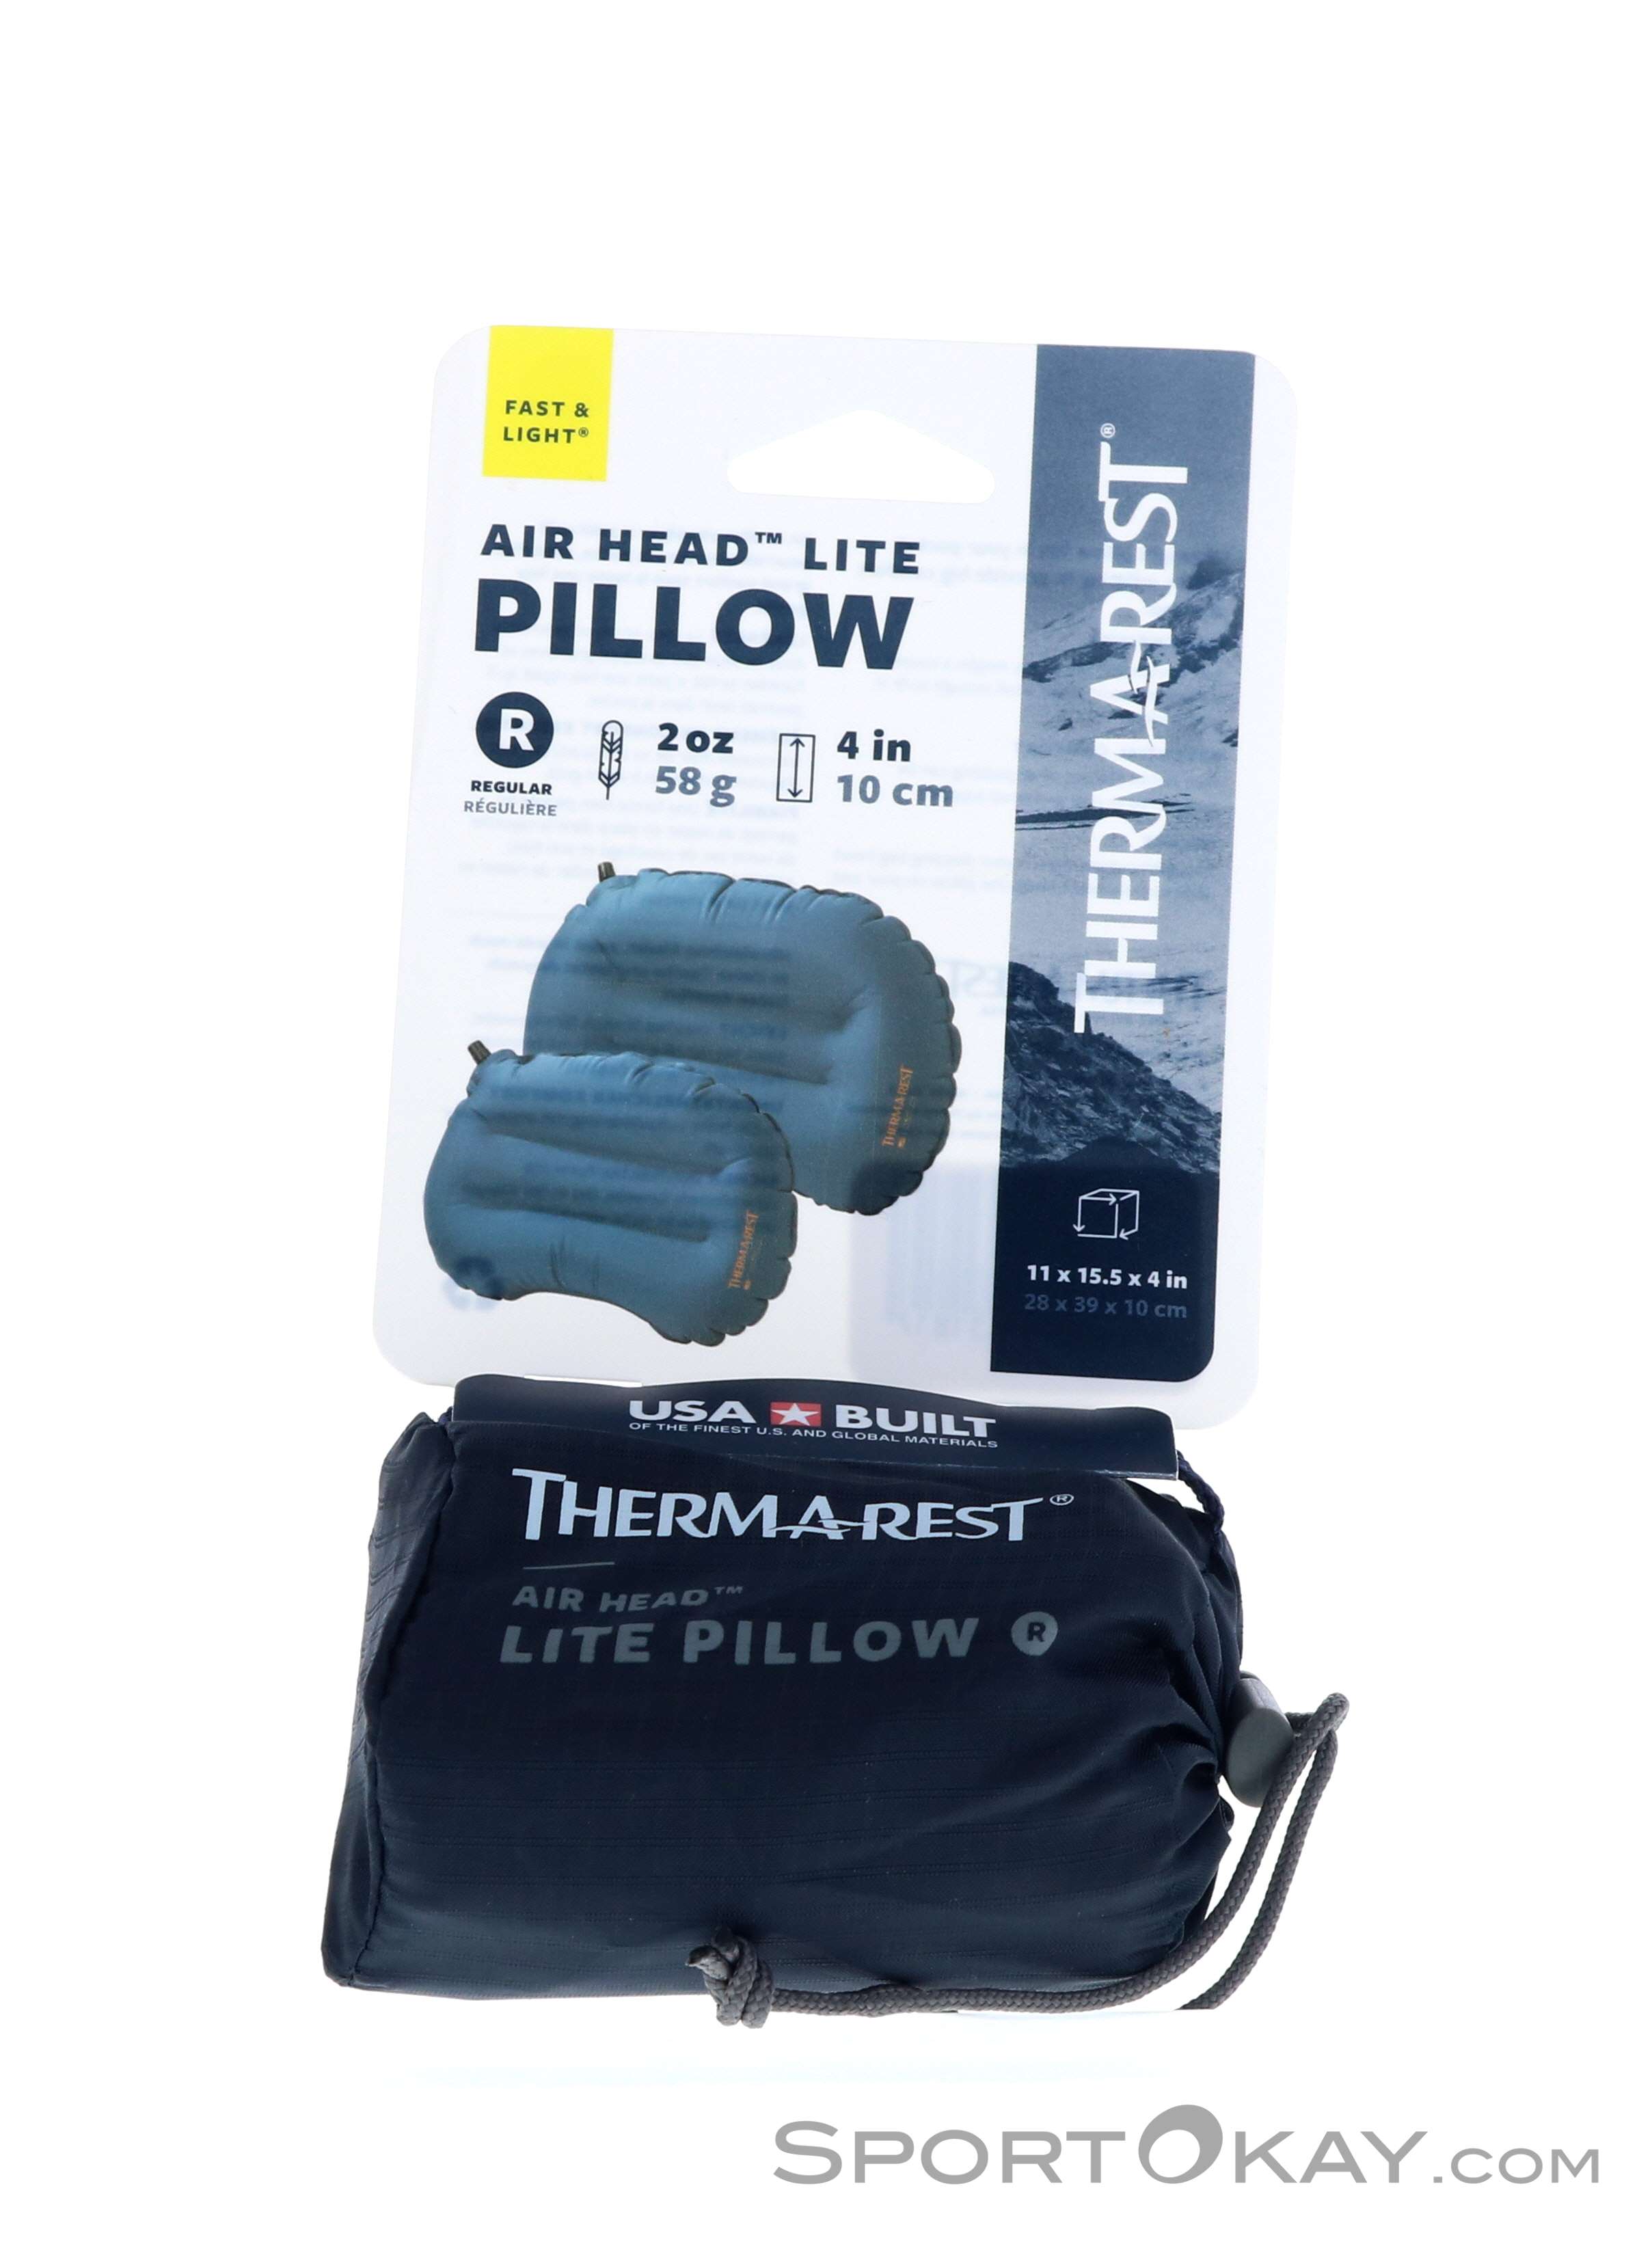 Thermarest Airhead Reg Pillow